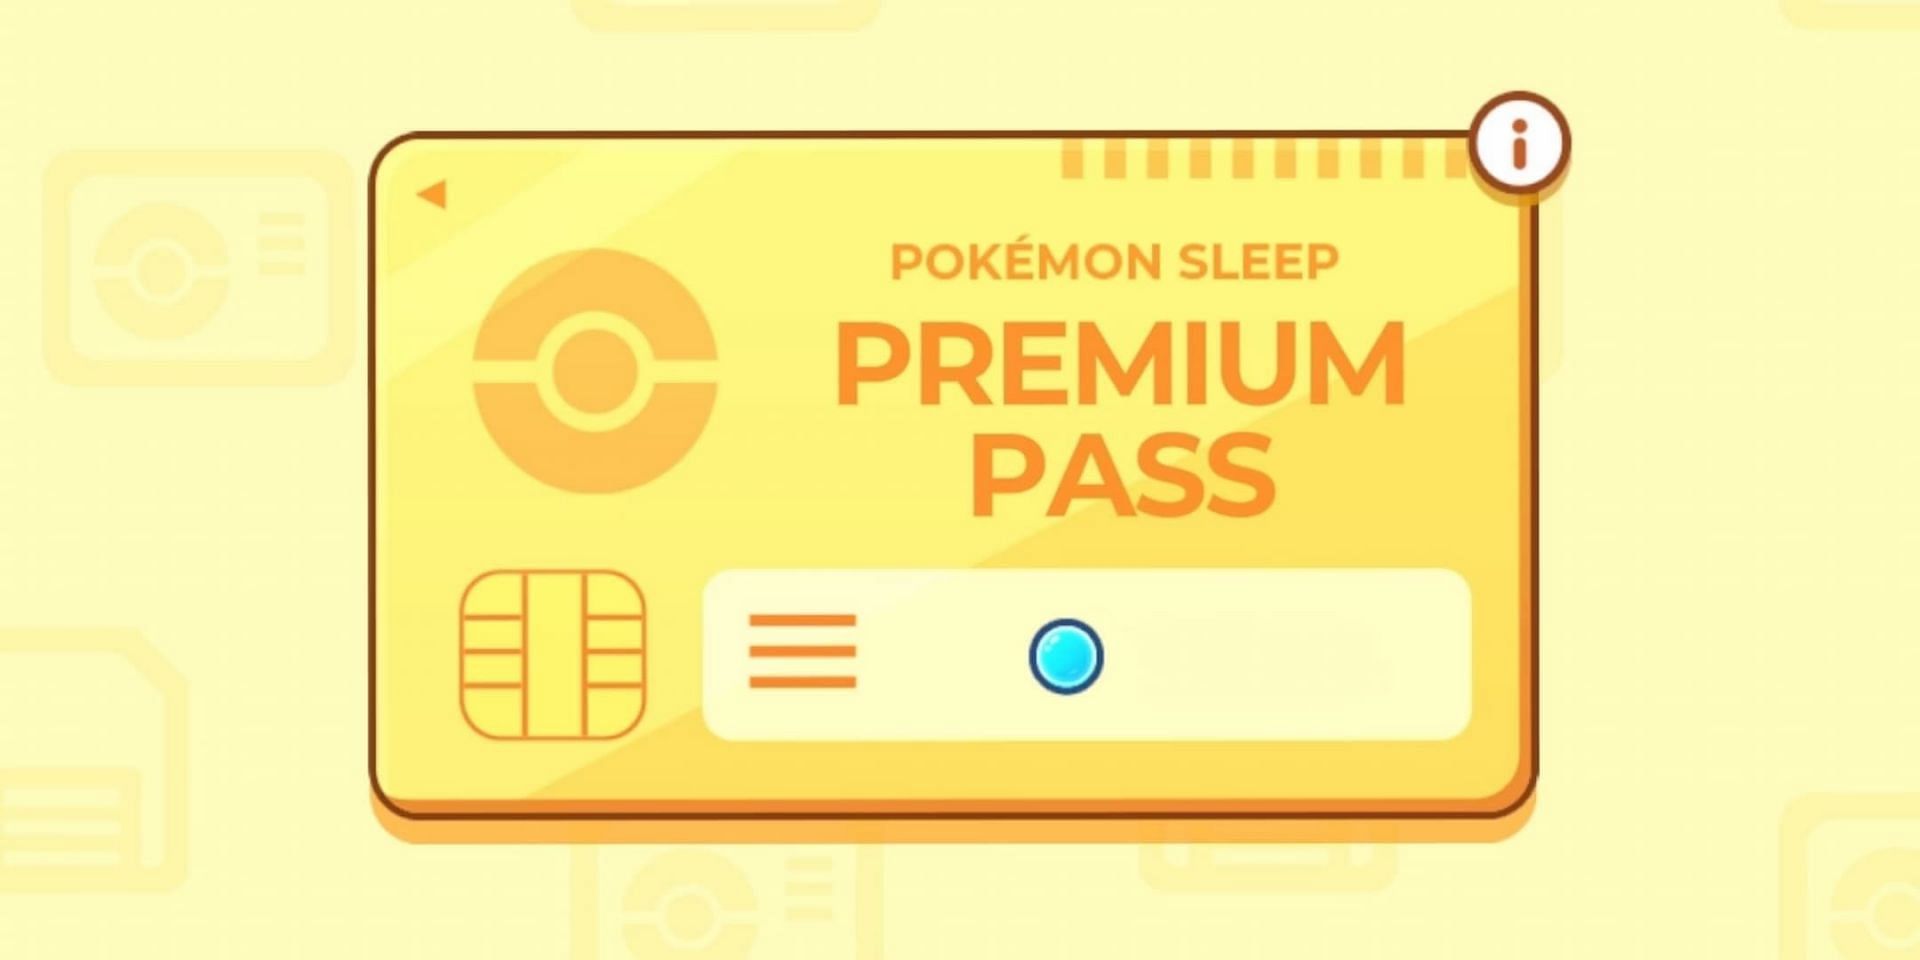 Pokemon Sleep: How to get Dream Shards - Charlie INTEL